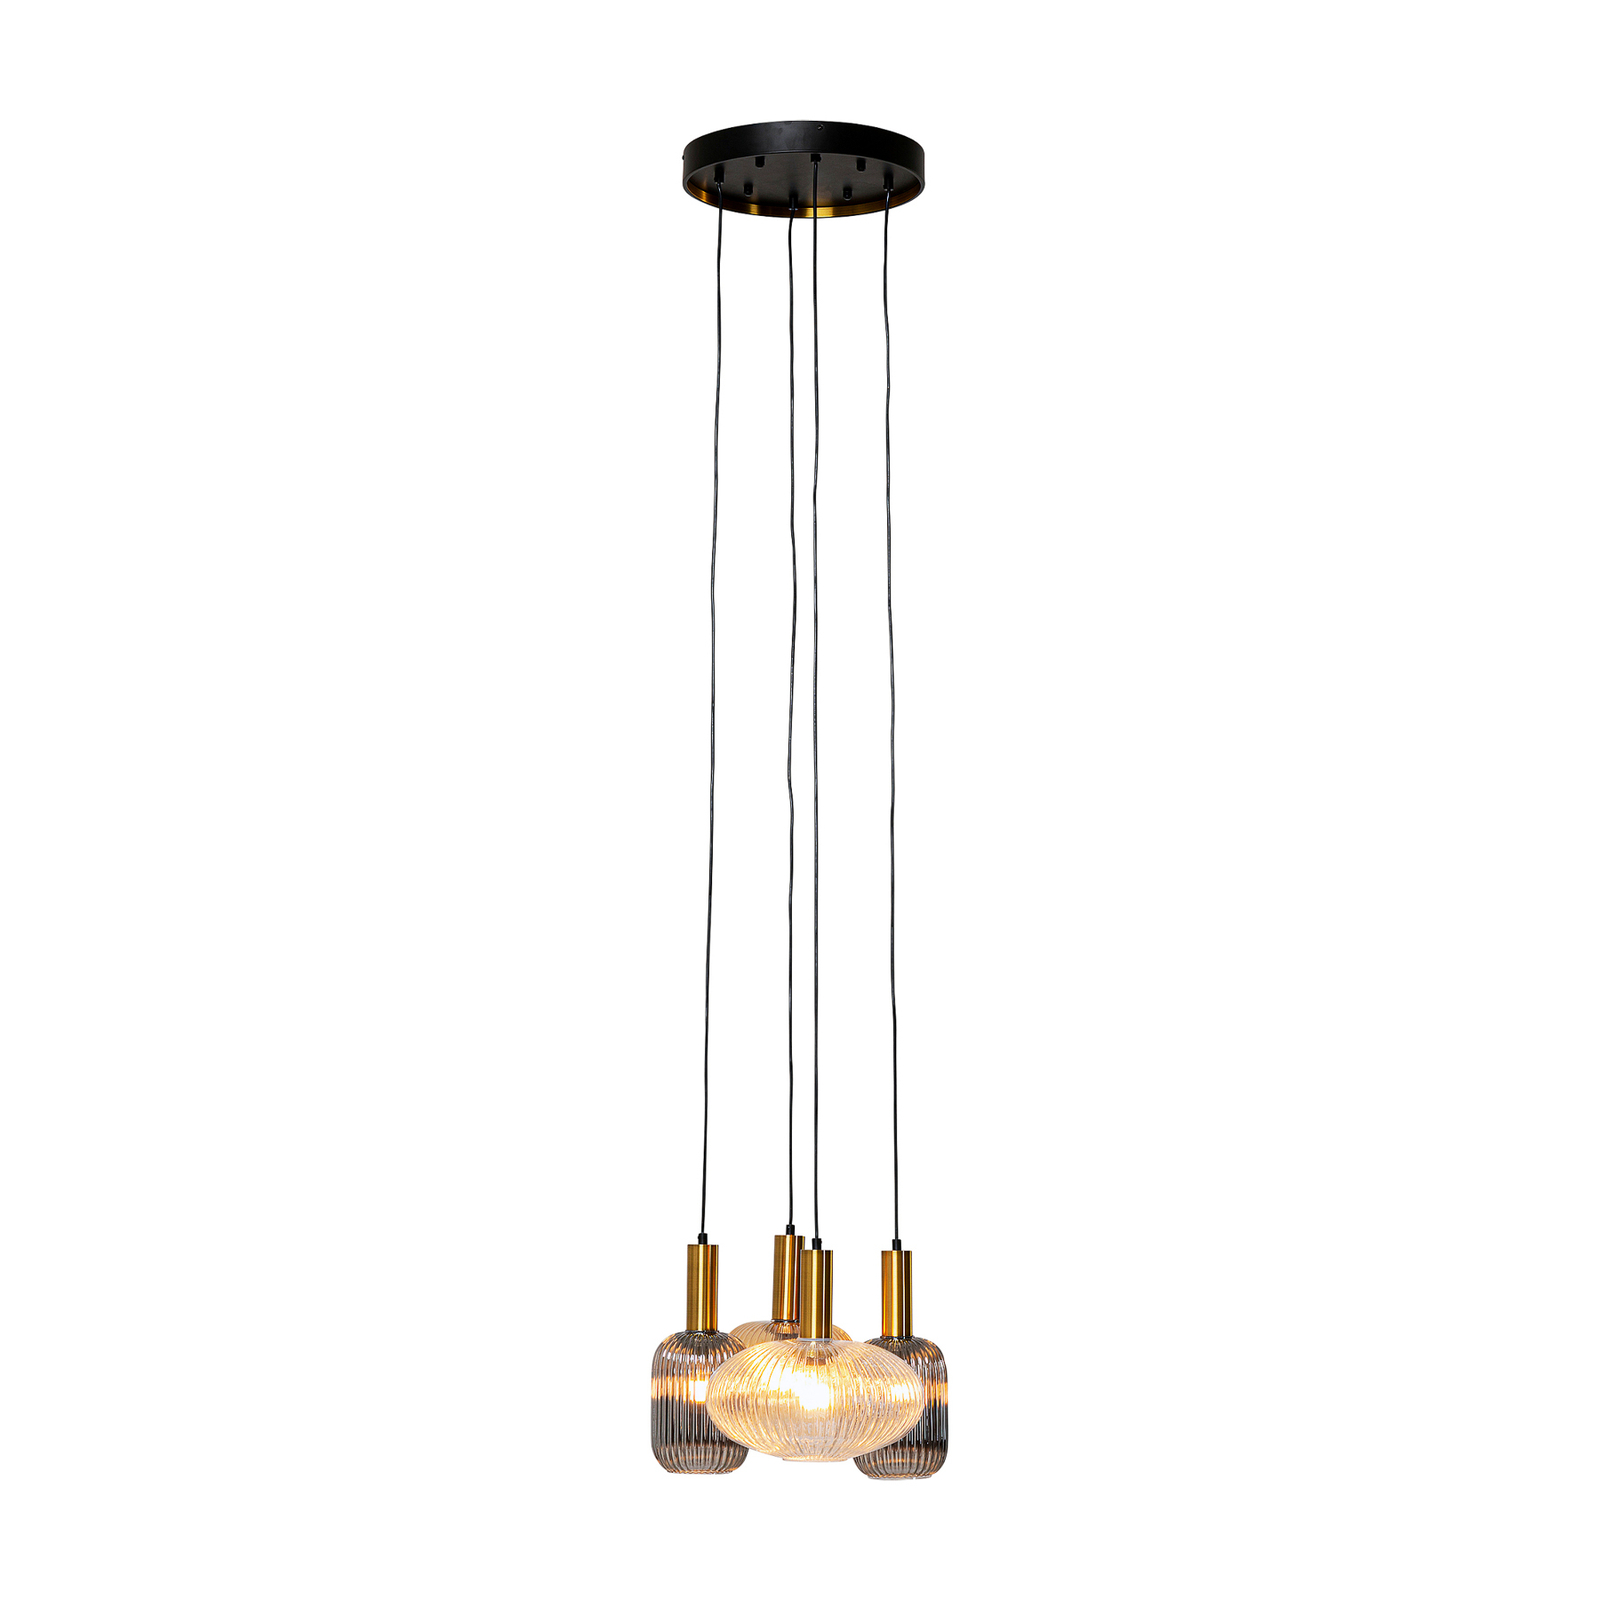 KARE Lobby Quattro pendant light 4-bulb